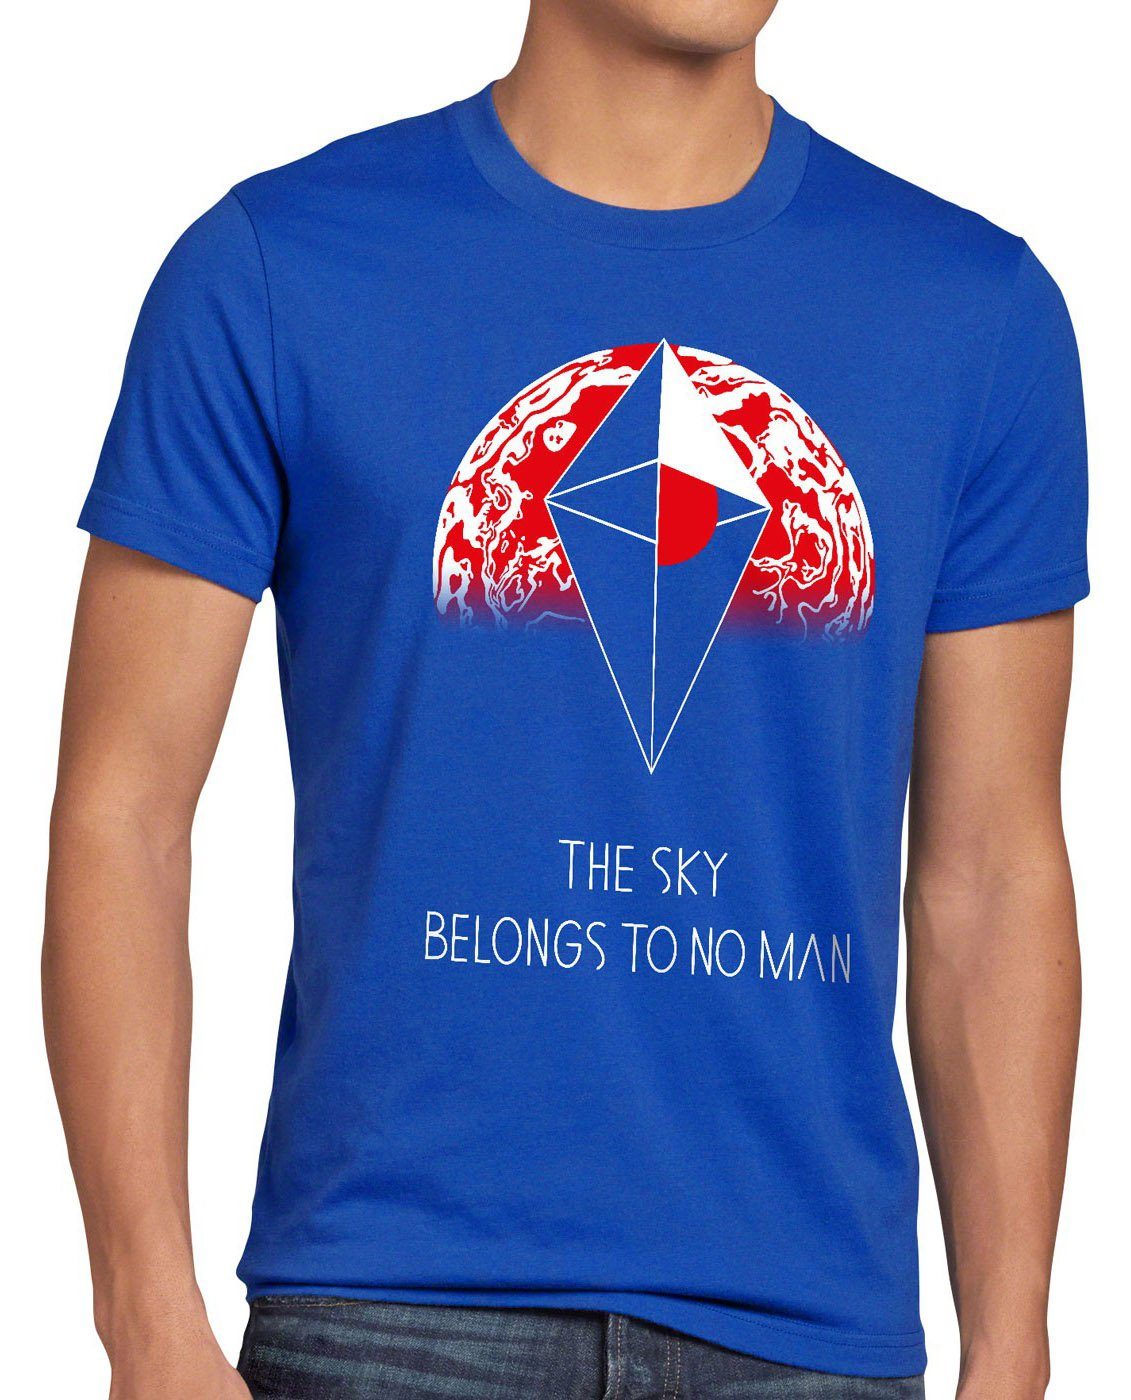 style3 Print-Shirt Herren T-Shirt blau no spiel world man game belongs reise Sky rpg weltraum open space